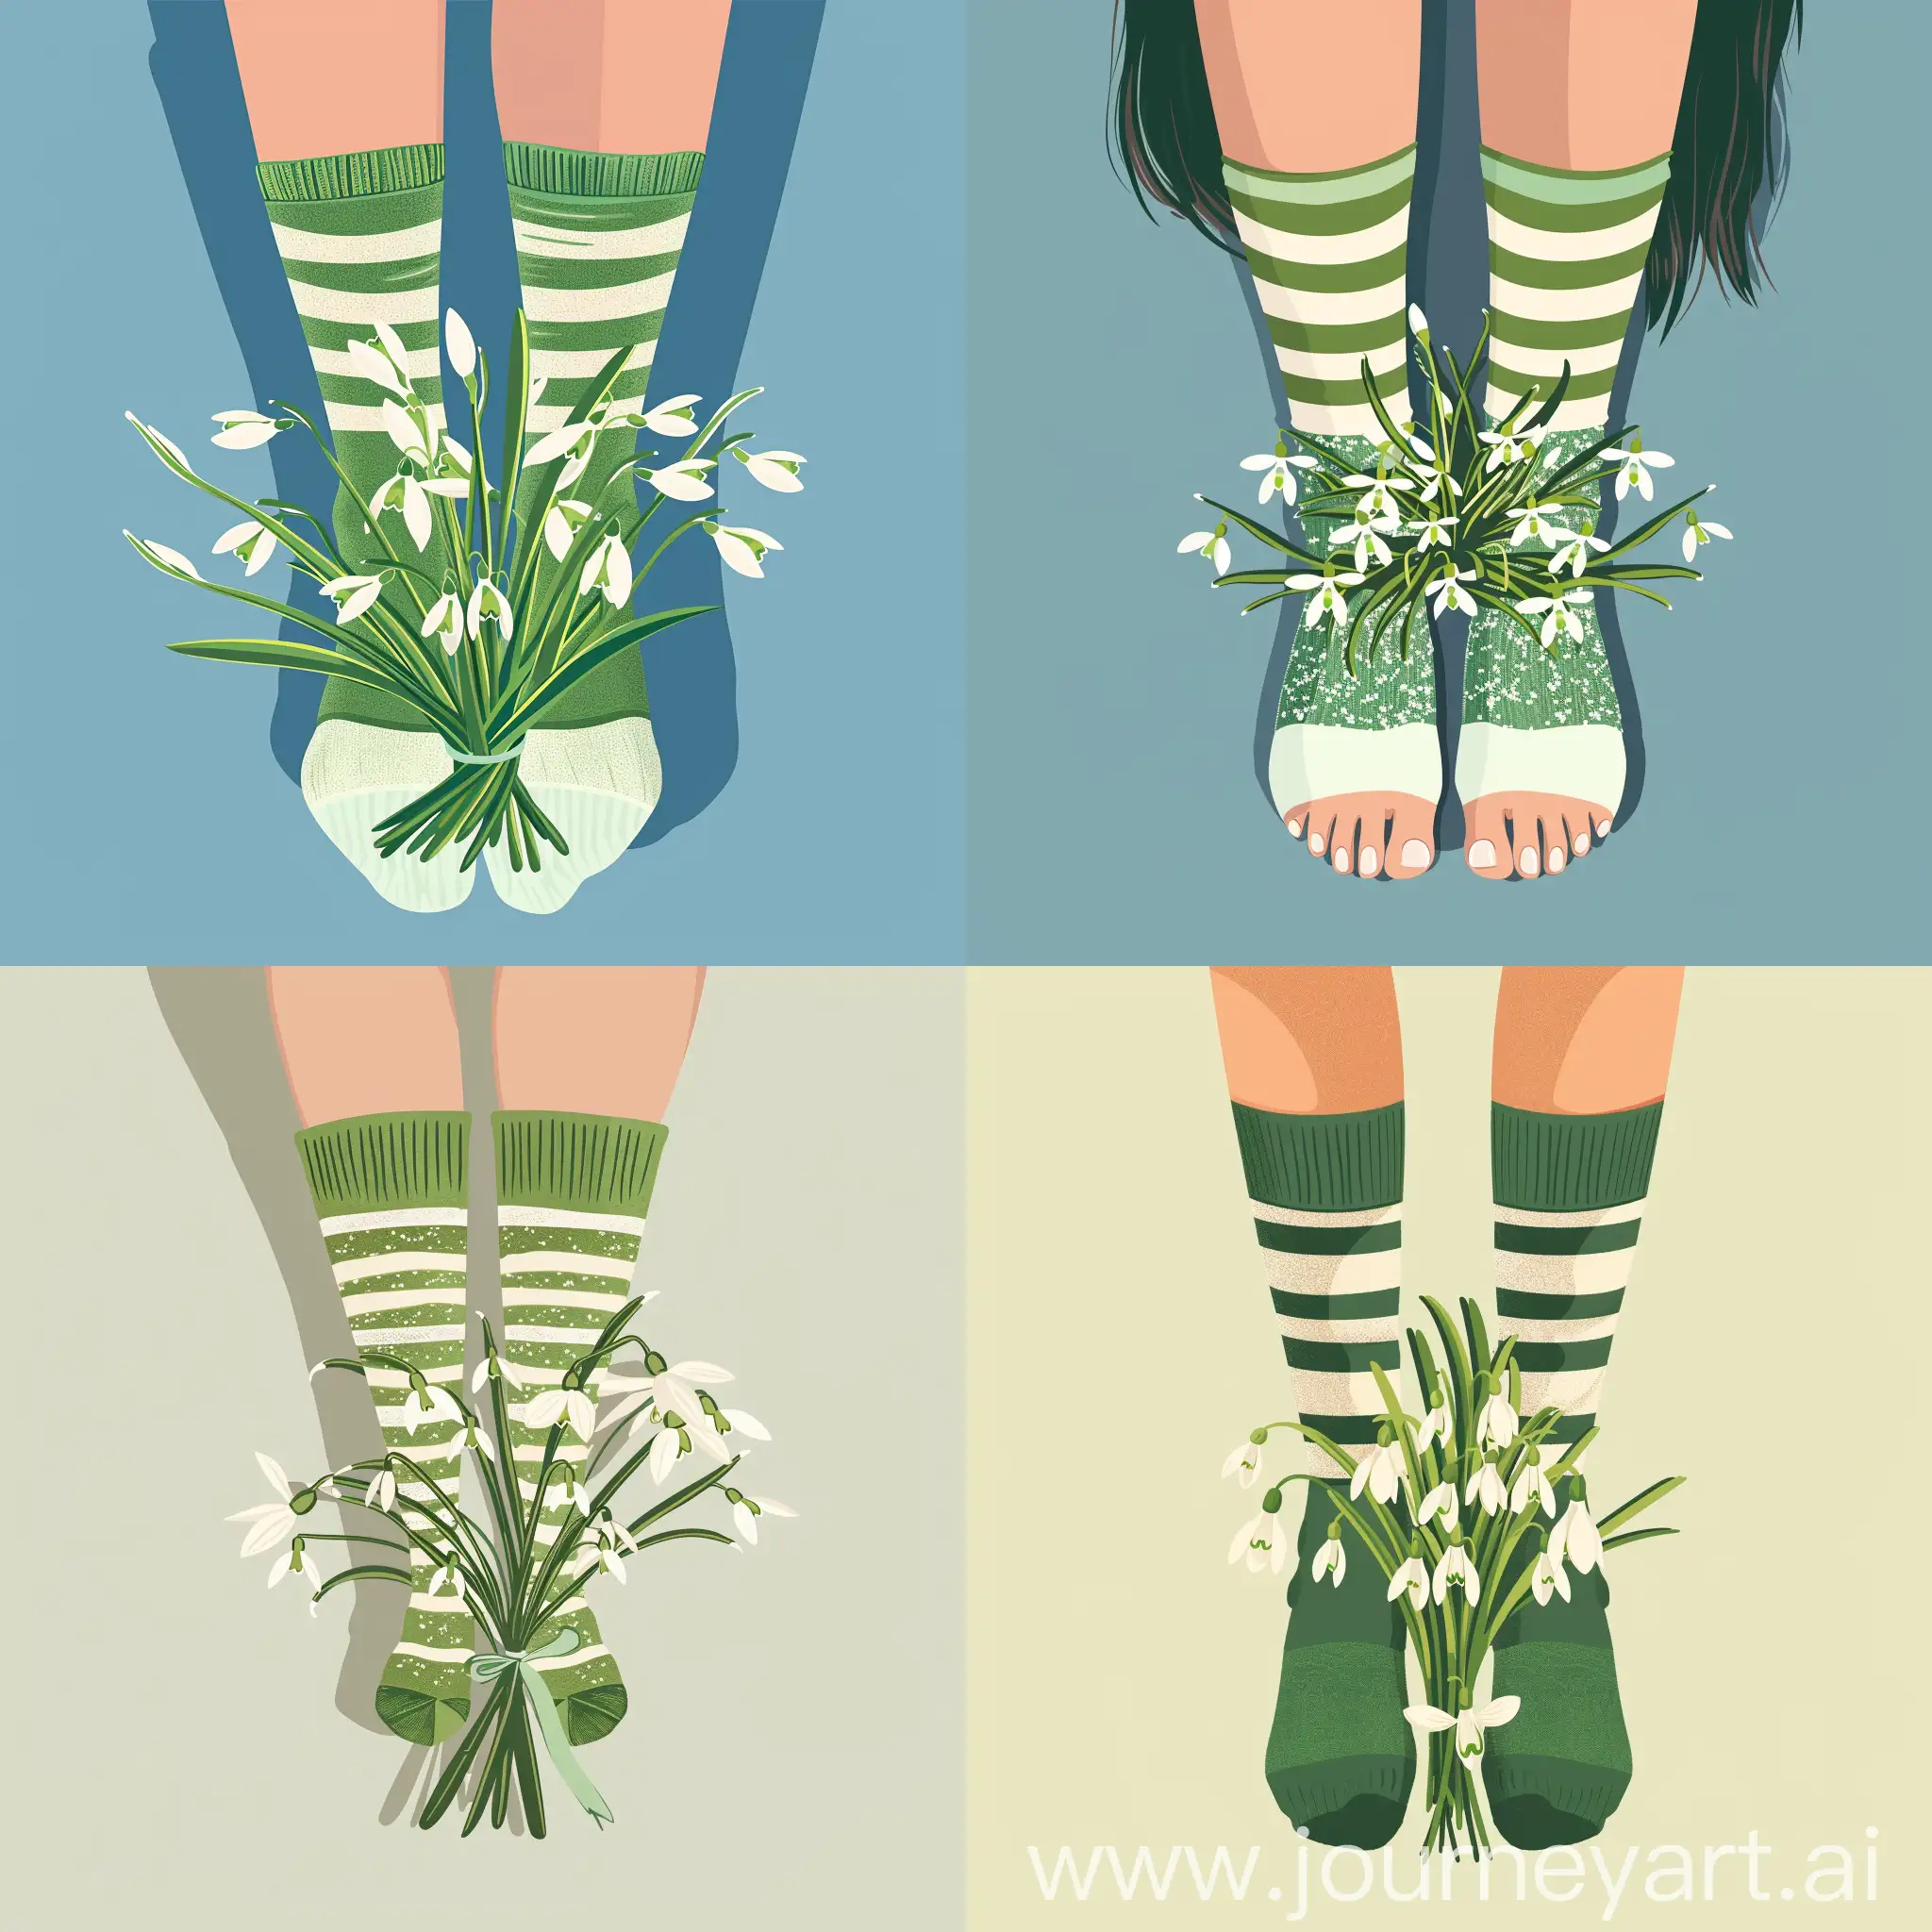 Girls-Feet-in-Green-Socks-with-Snowdrop-Bouquet